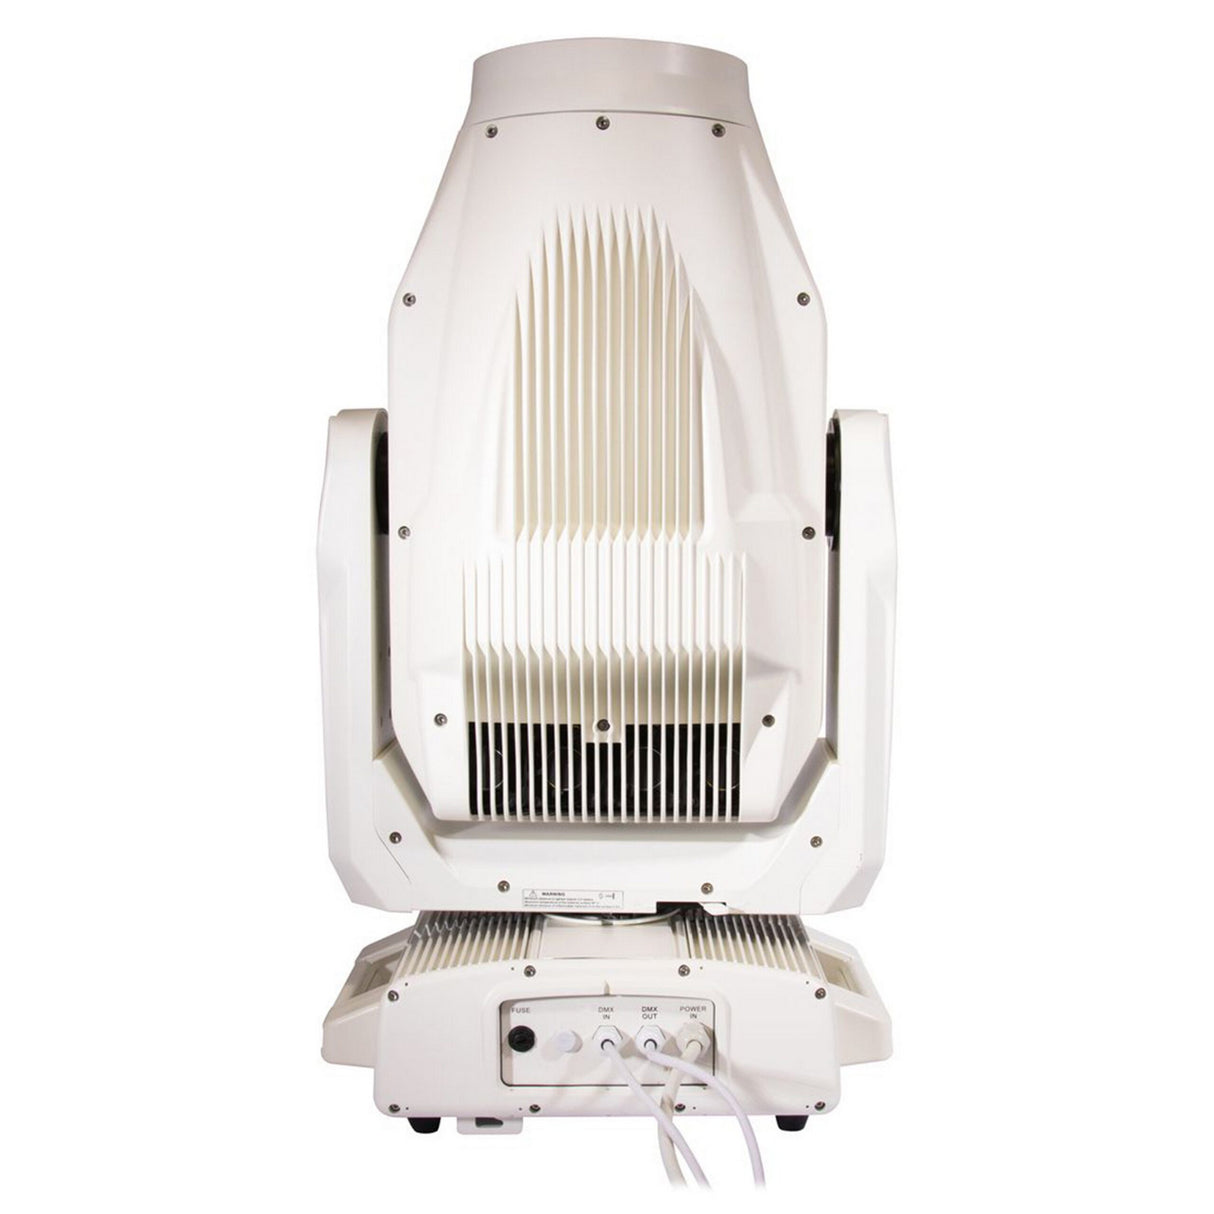 Elation Proteus Maximus WMG High Efficiency 950W 6,500K White LED Fixture